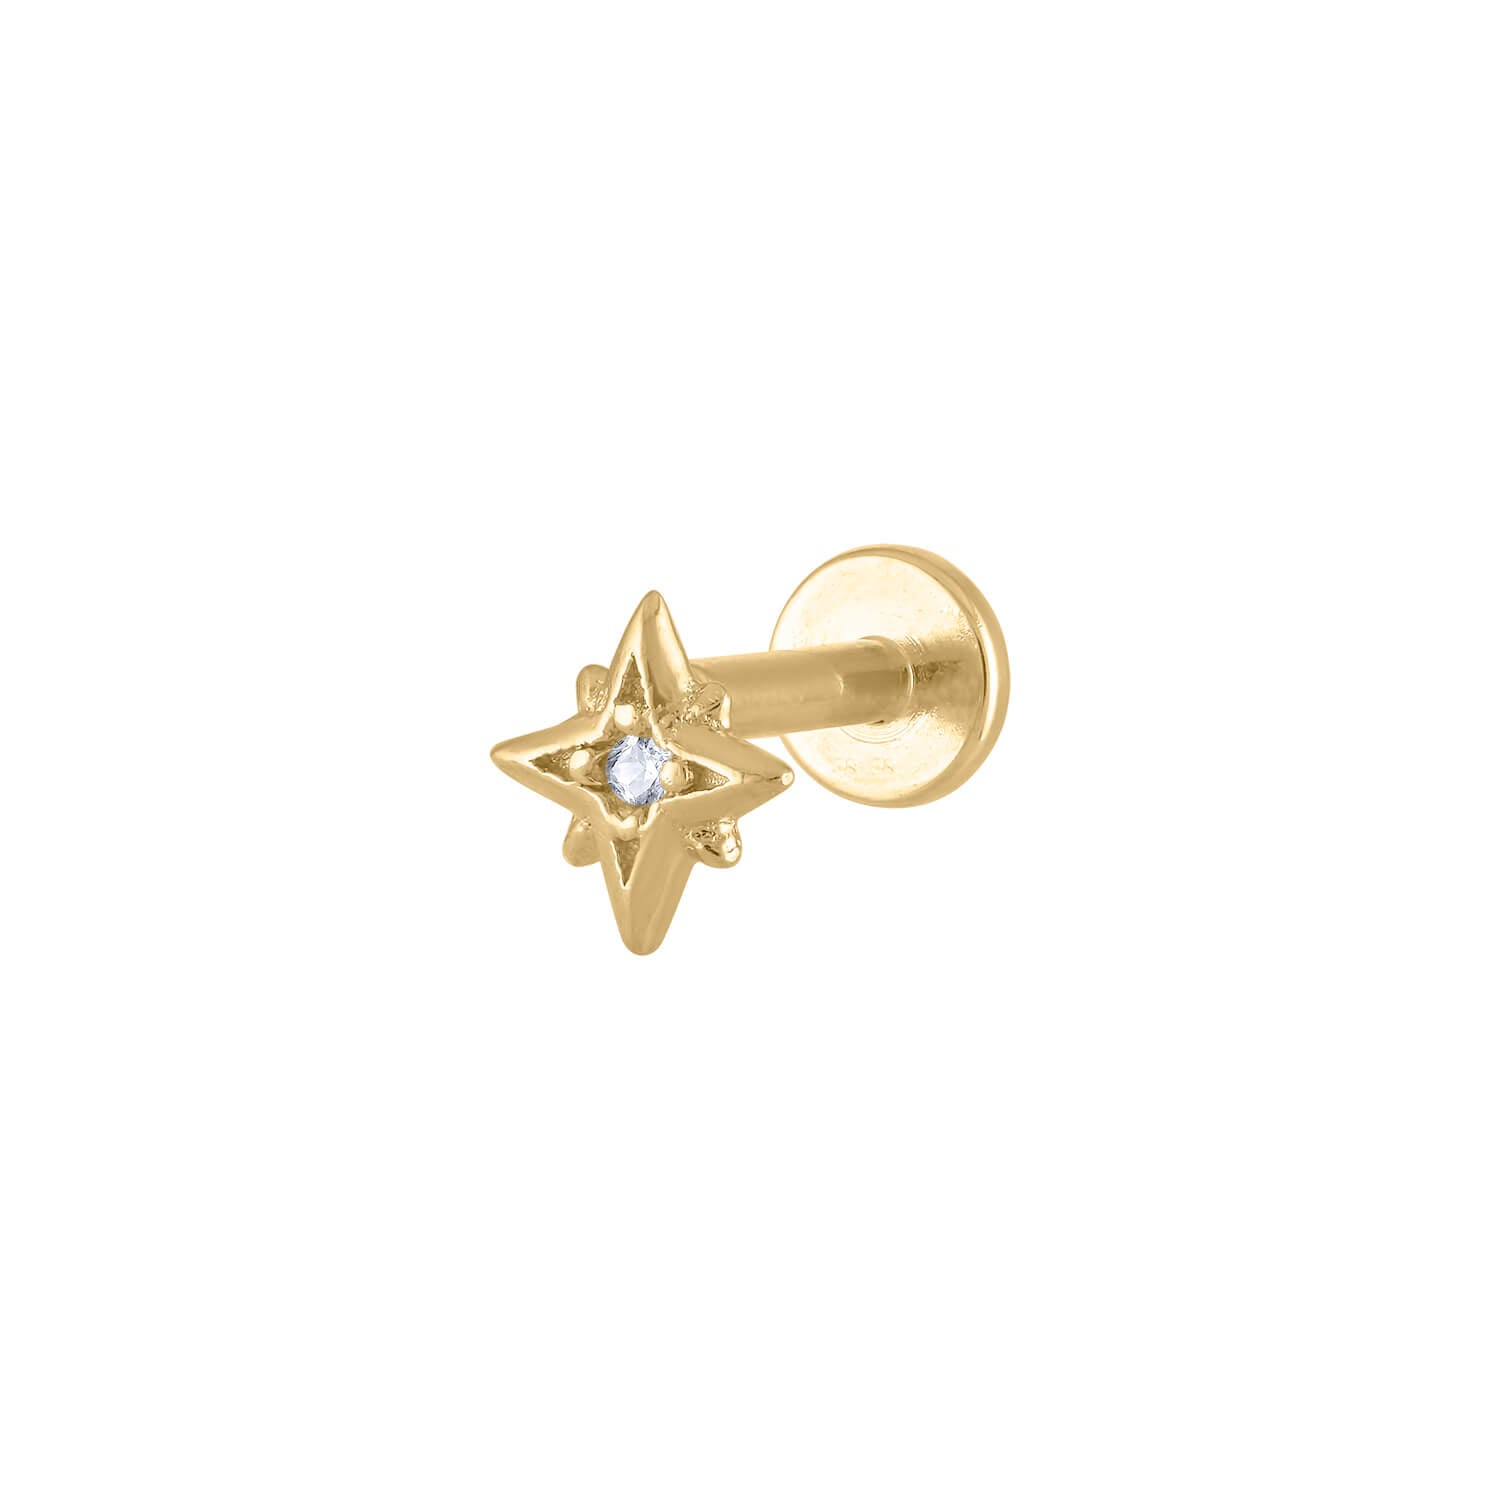 North Star Threaded Flat Back Earring, Titanium - Gold / 18g: Healed Cartilage Piercings / 8mm at Maison Miru